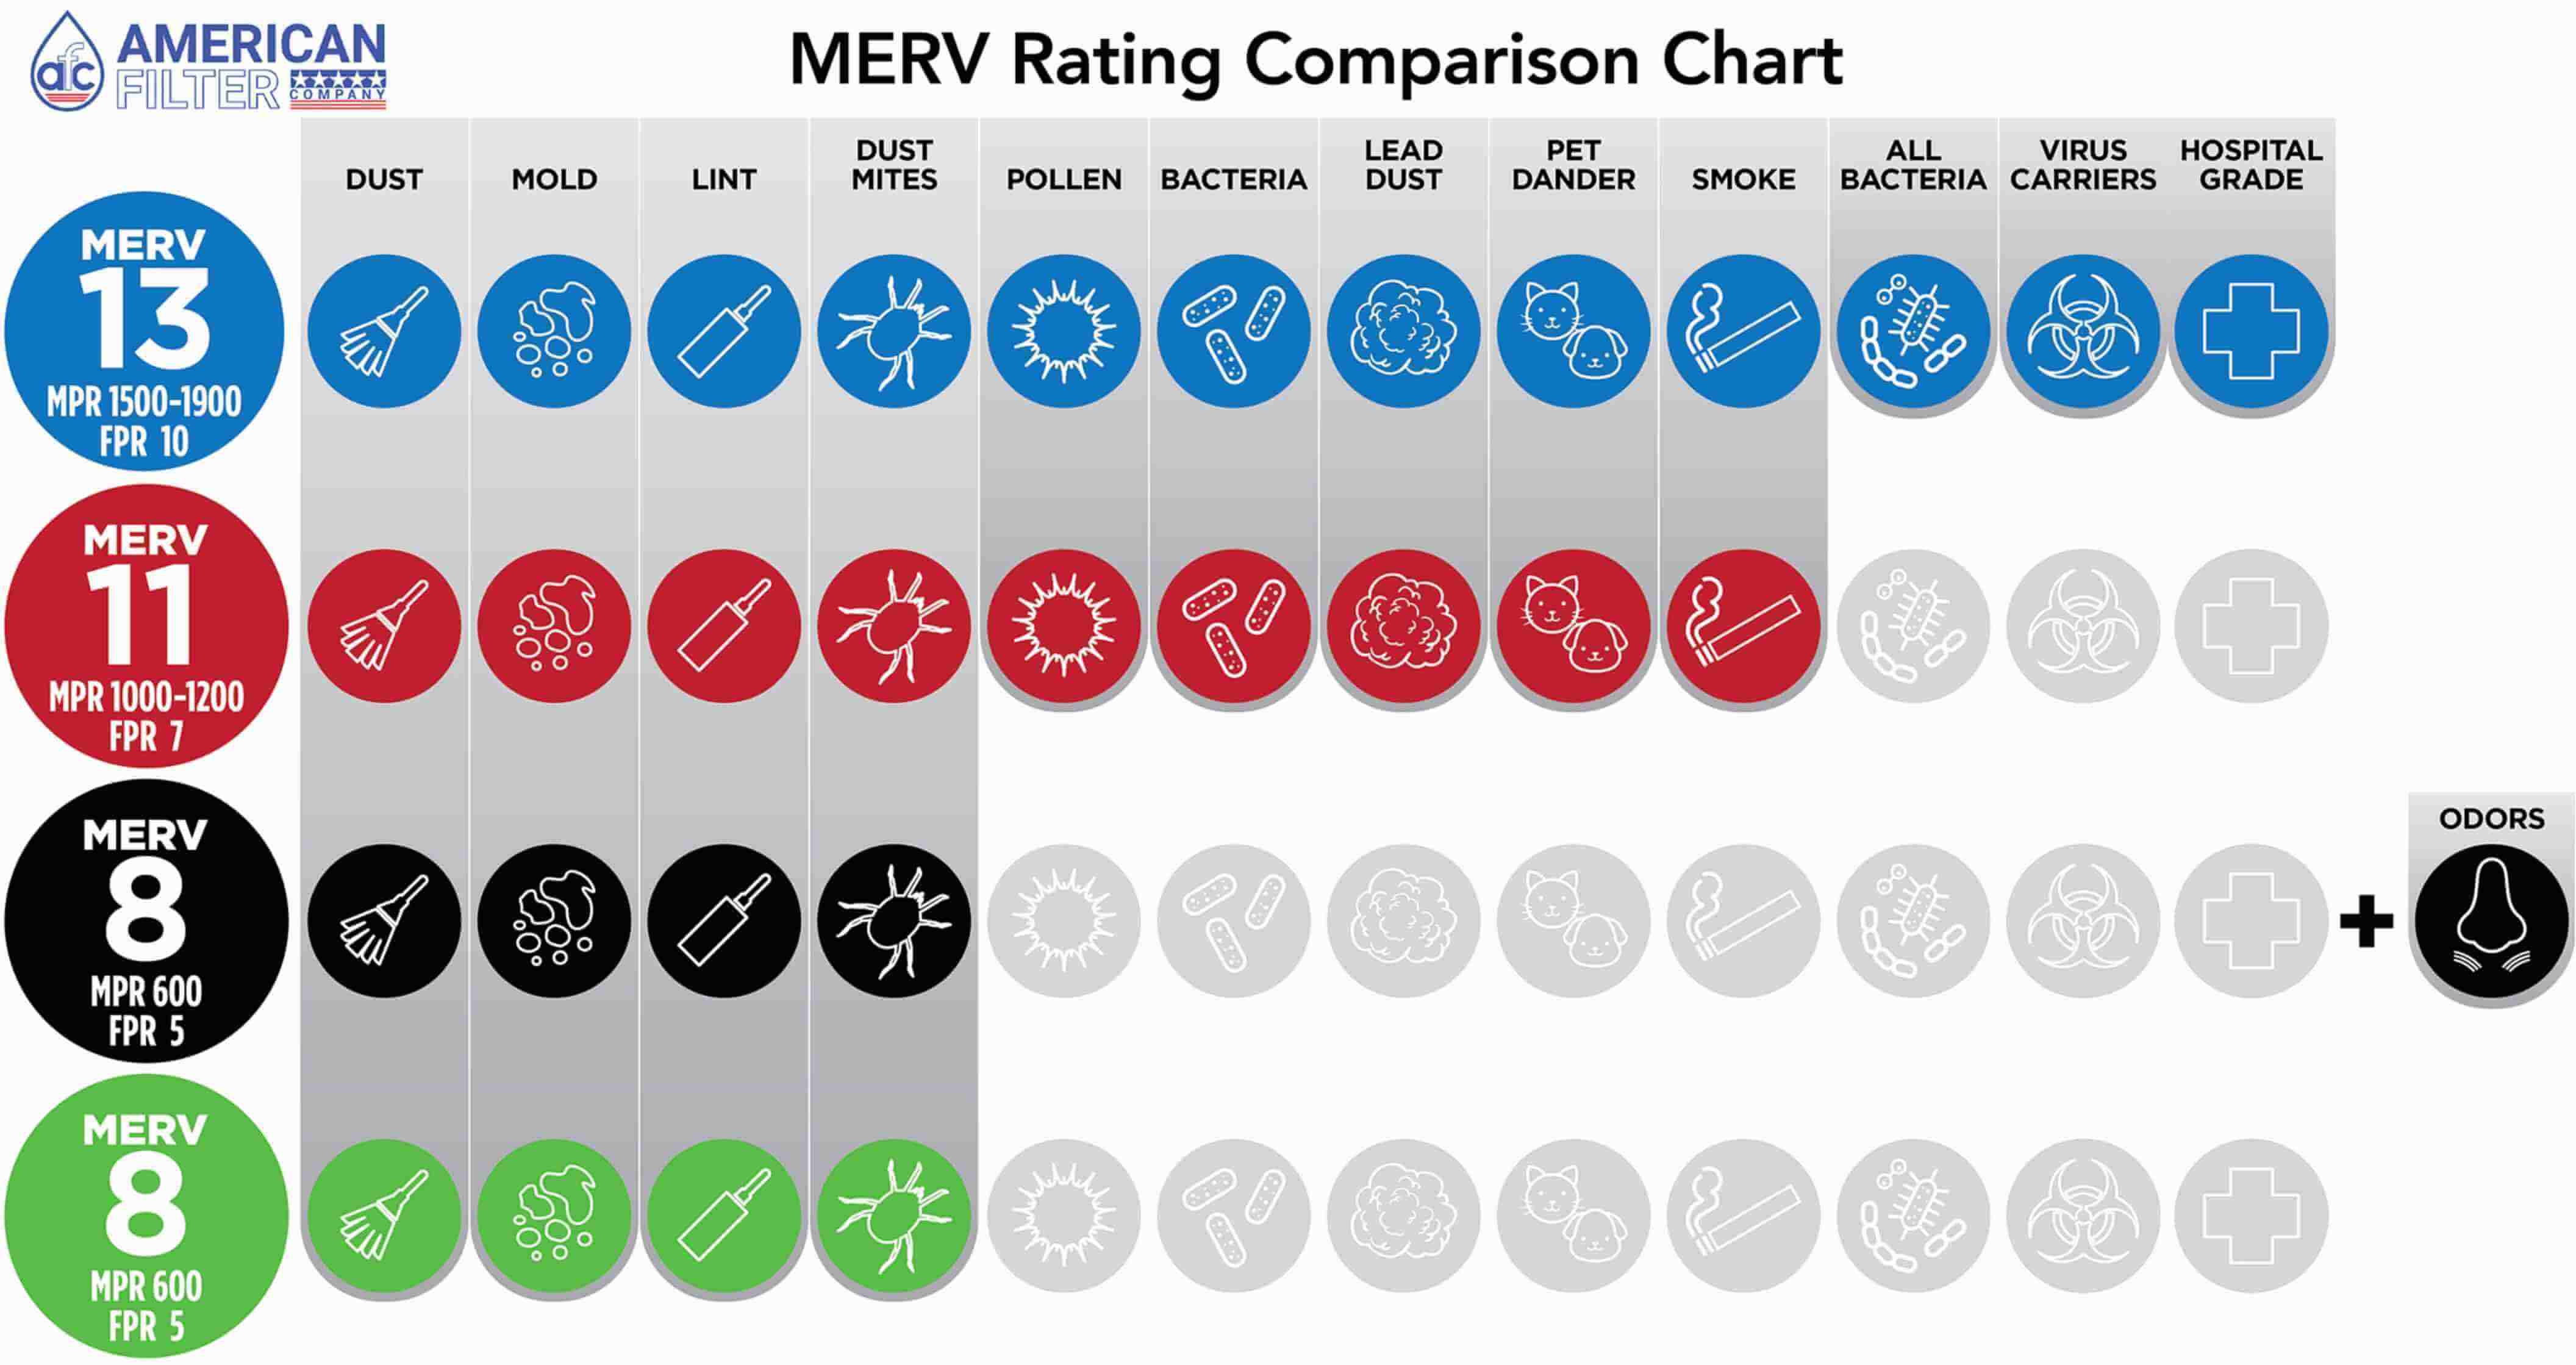 MERV Rating Comparison Chart